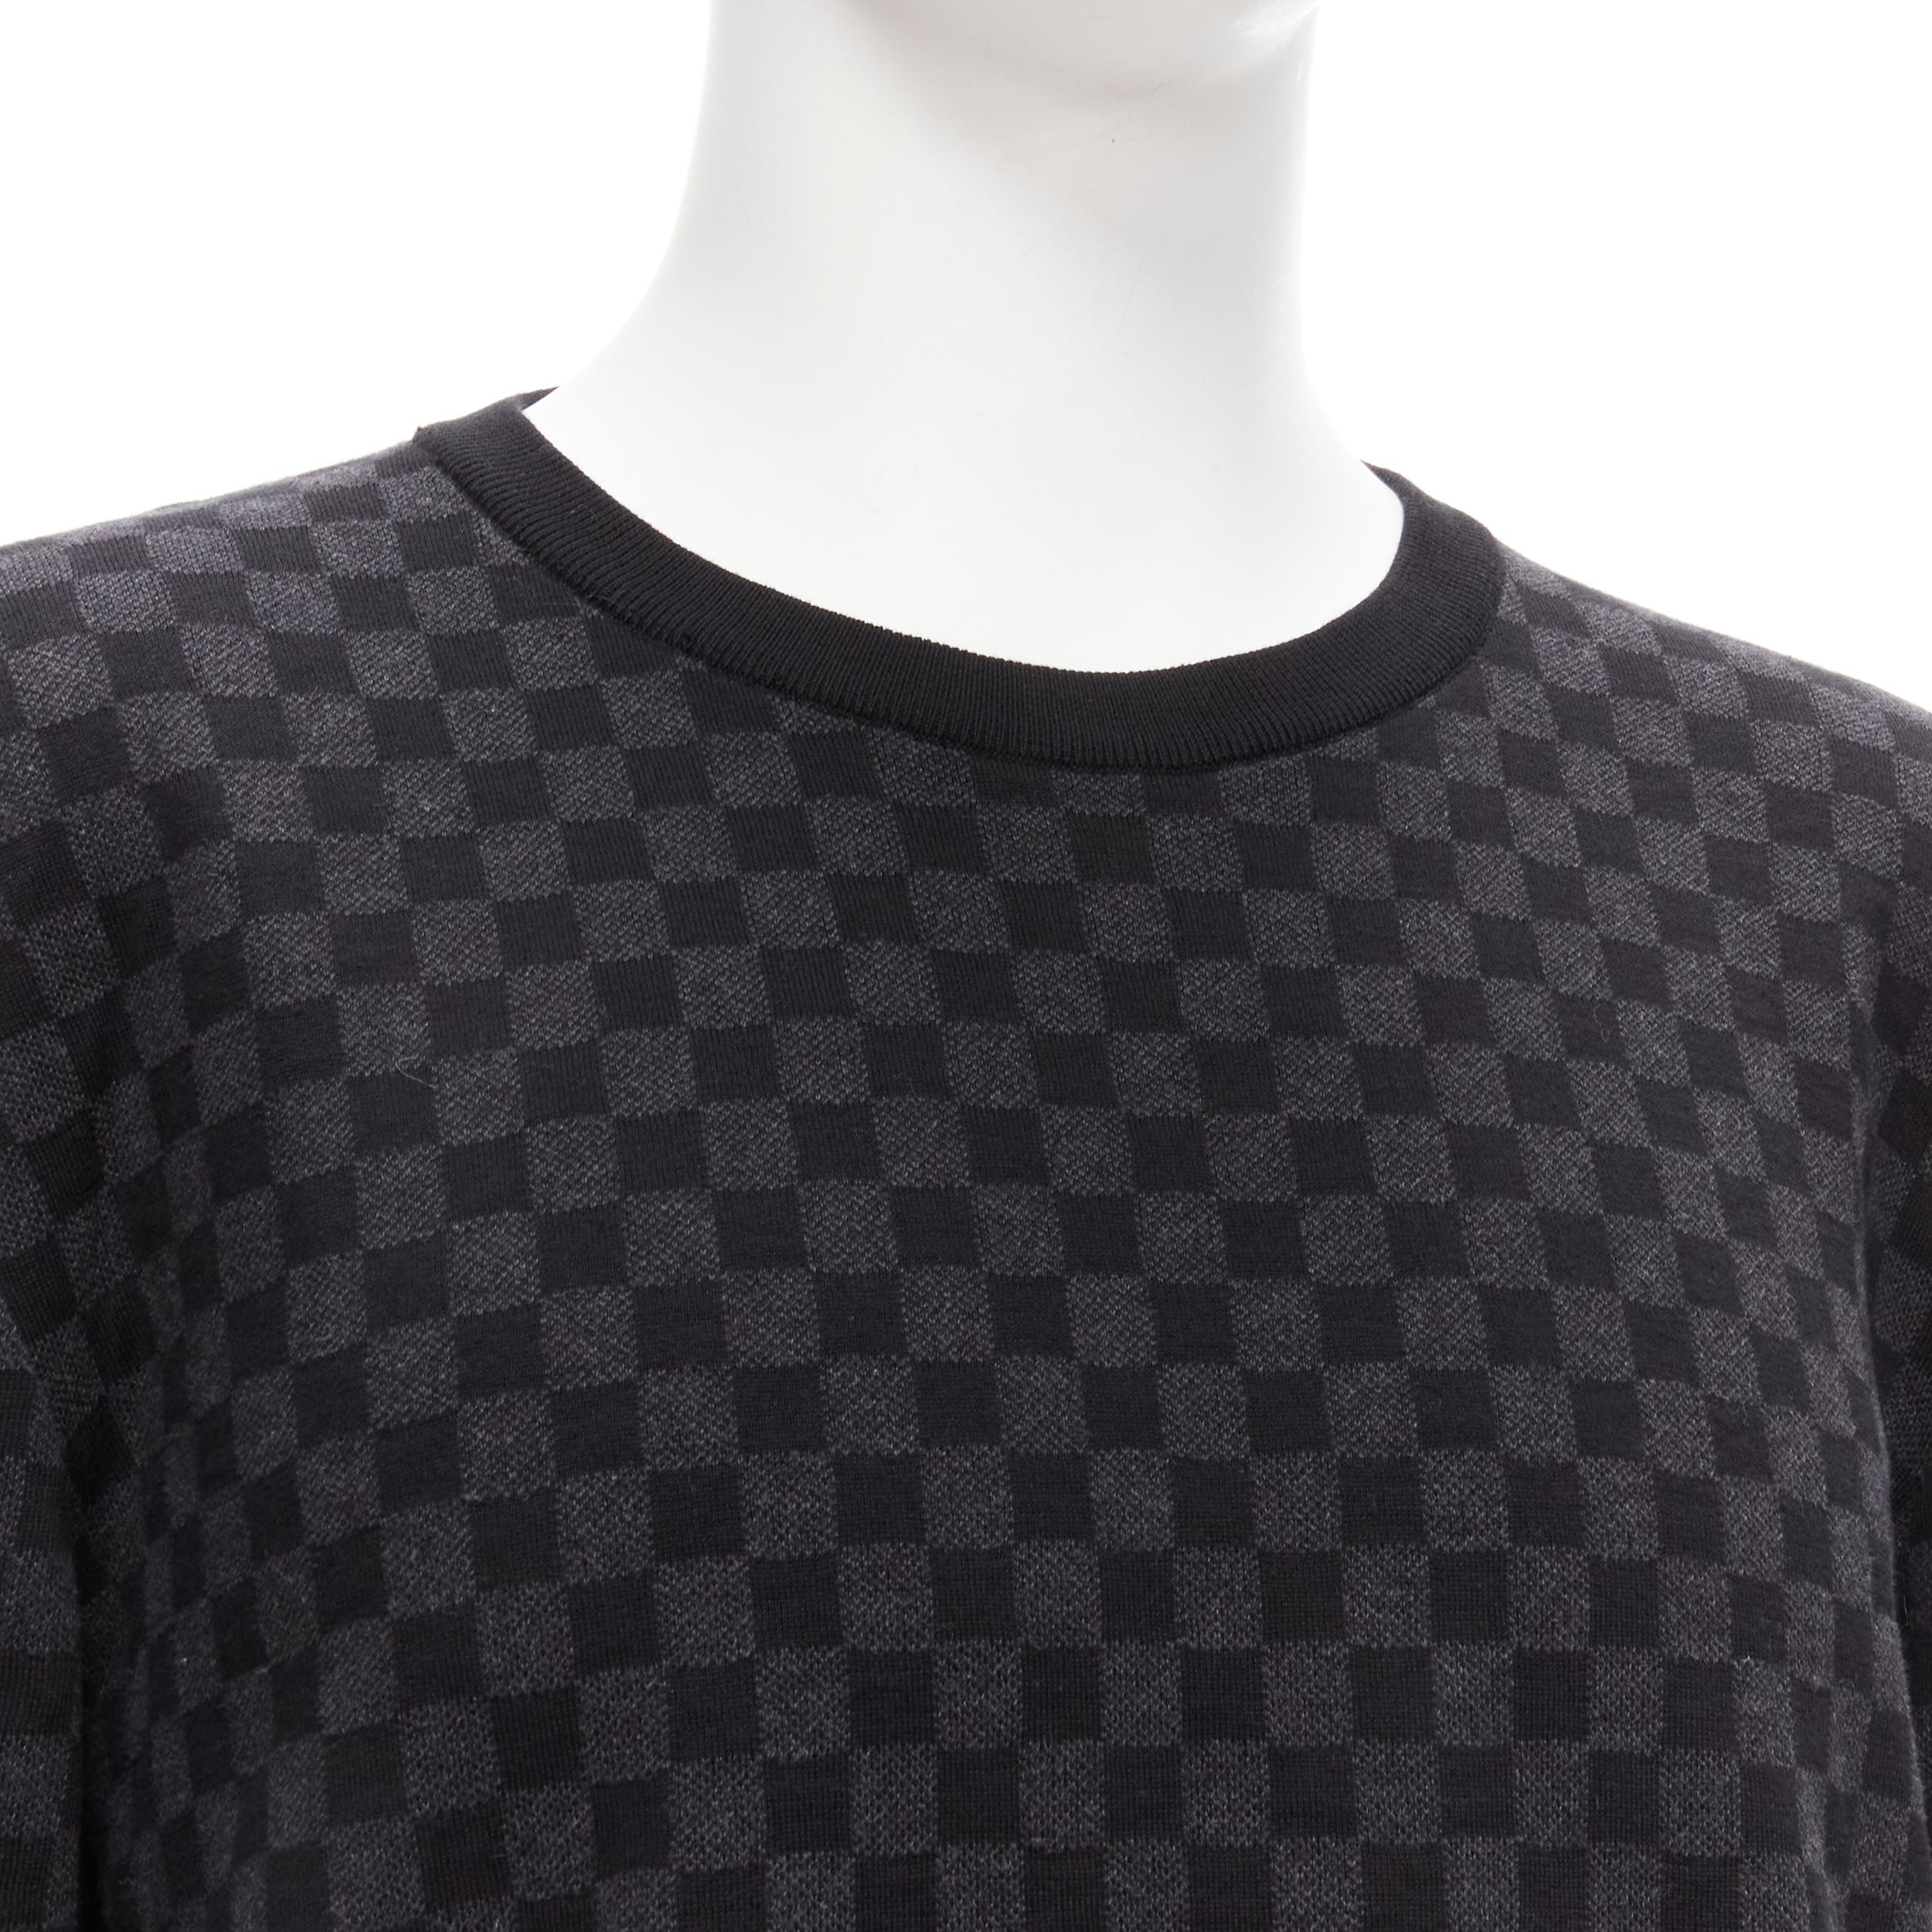 LOUIS VUITTON LV logo black grey signature damier check sweater XL 3